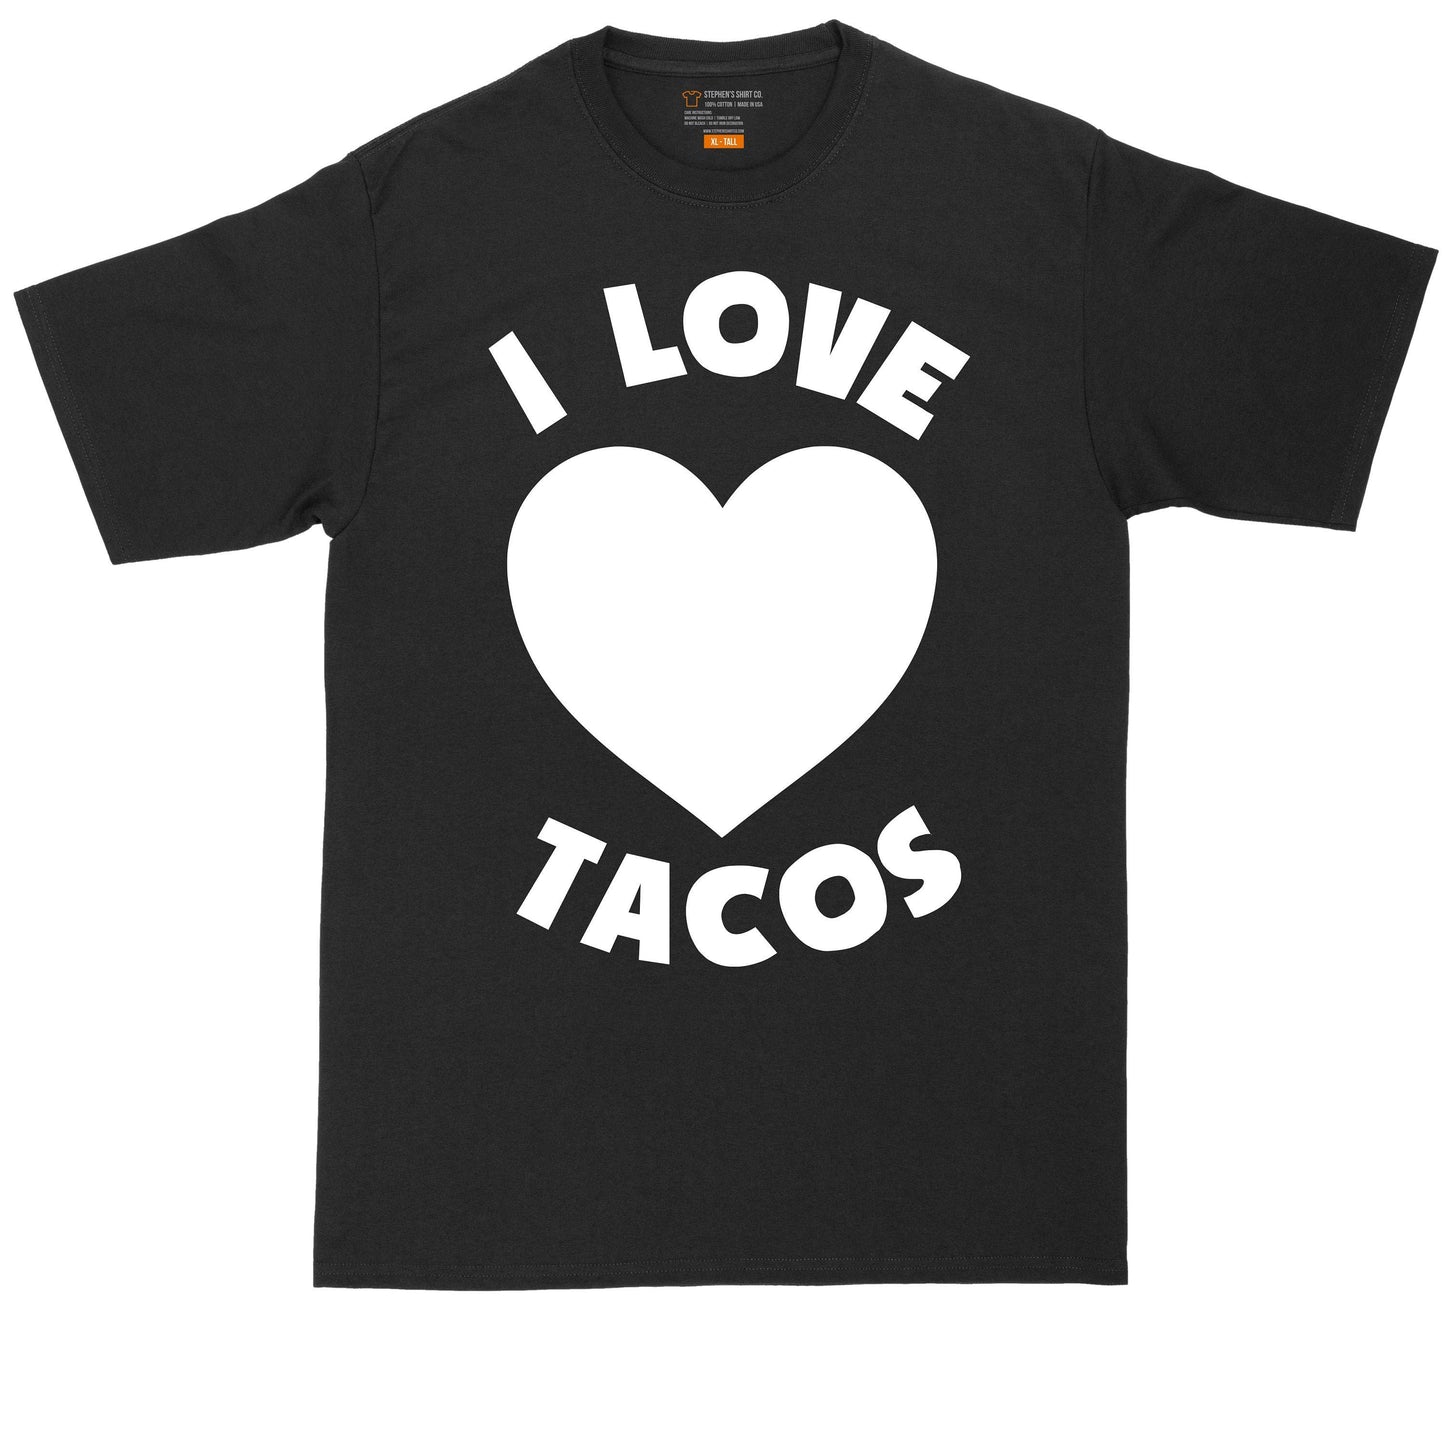 Mens Graphic Taco Shirt | I Love Tacos | Mens Big and Tall T-Shirt